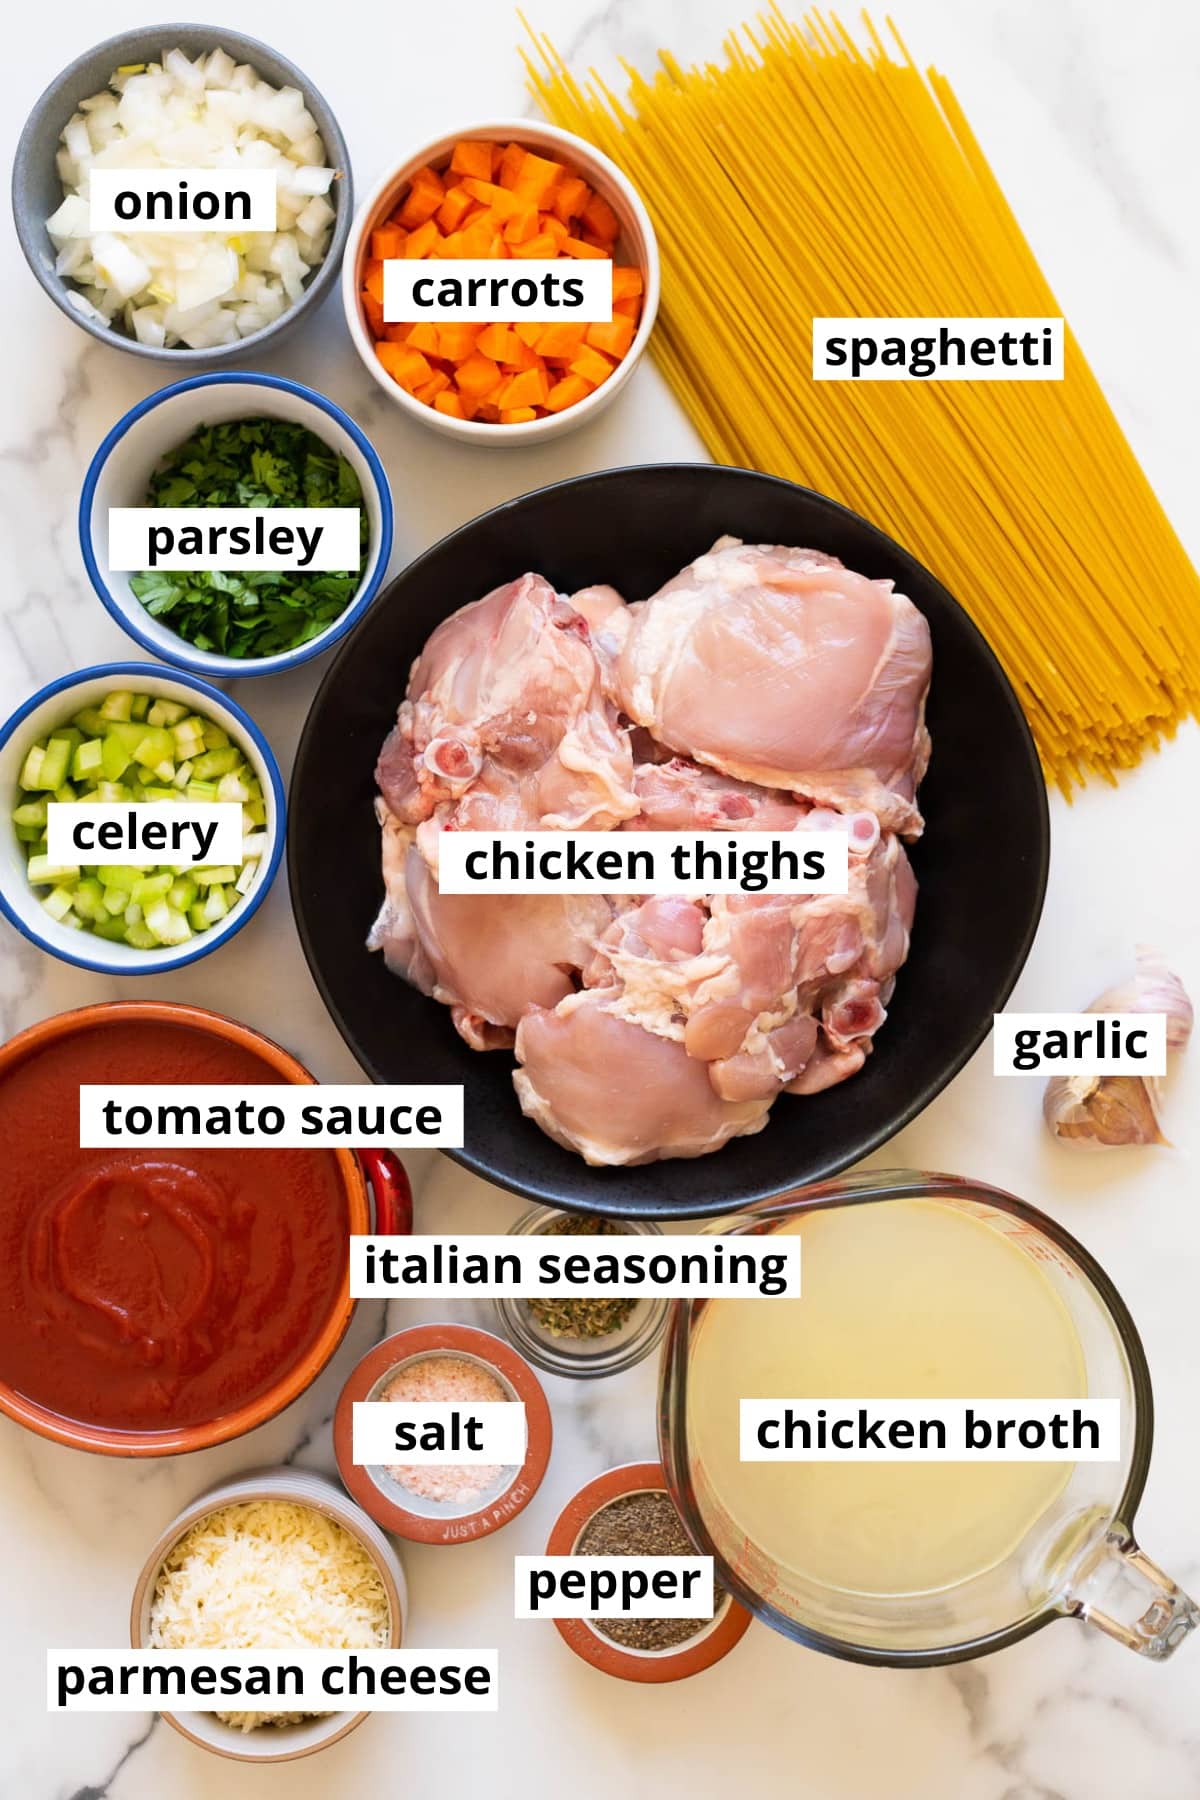 Chicken thighs, spaghetti, onion, carrots, parsley, celery, garlic, tomato sauce, Italian seasoning, chicken broth, parmesan cheese, salt, pepper.